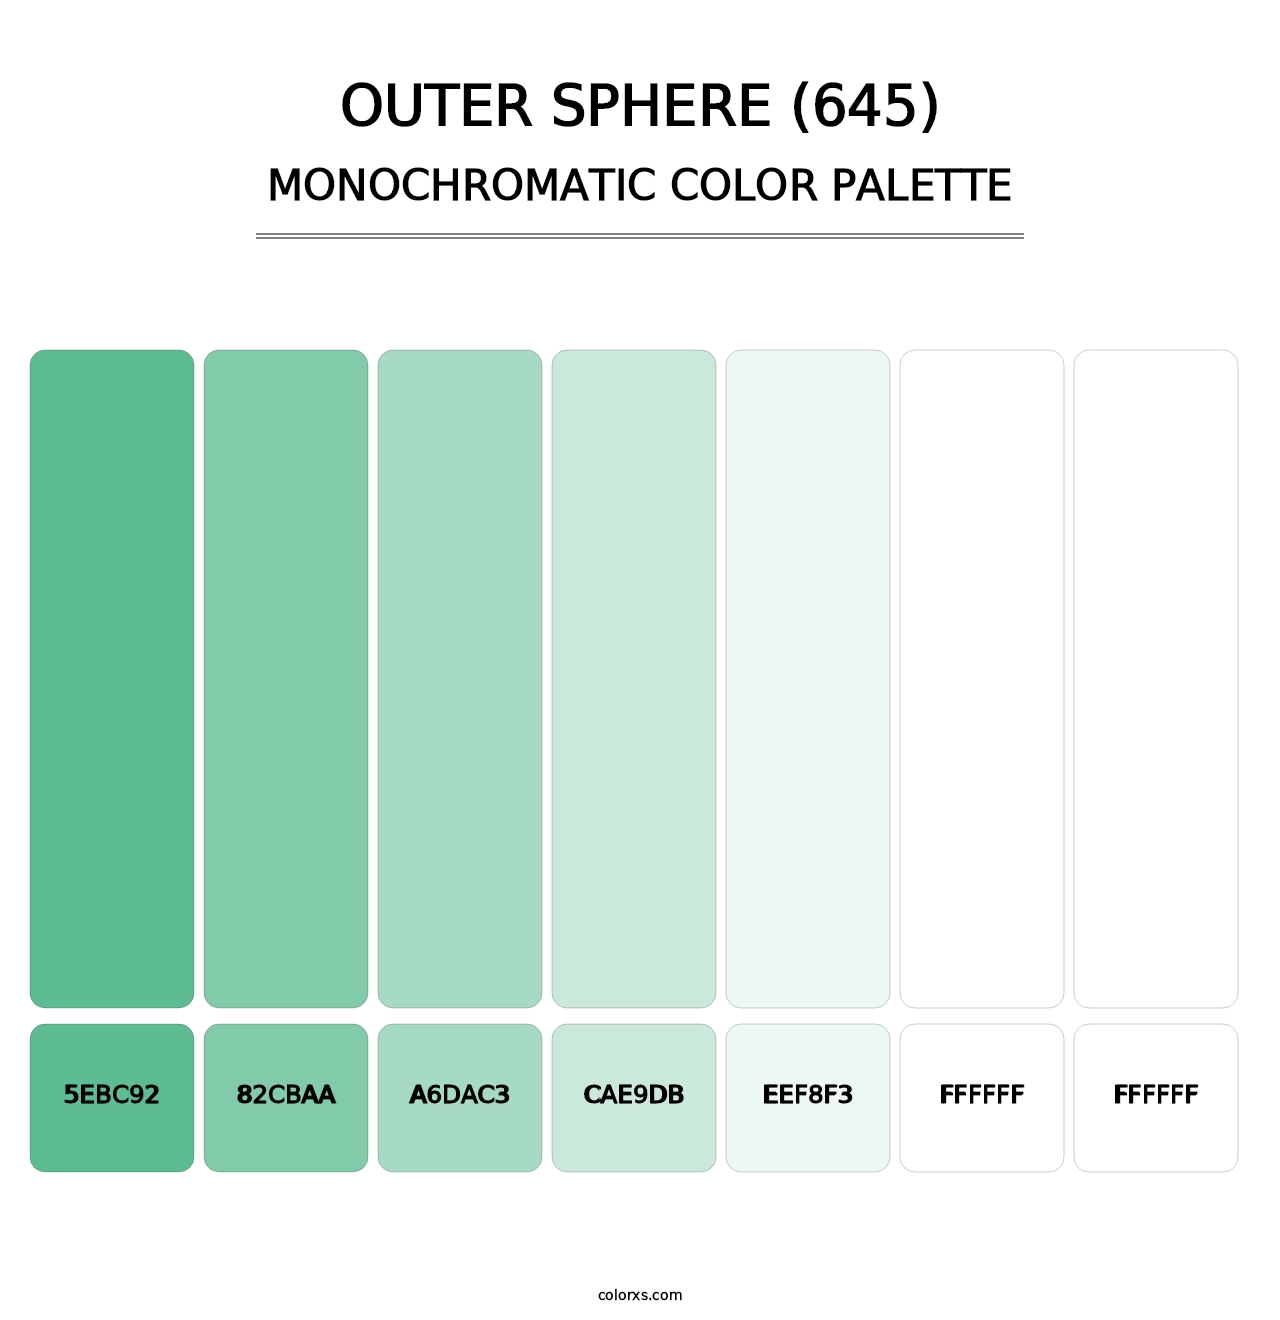 Outer Sphere (645) - Monochromatic Color Palette